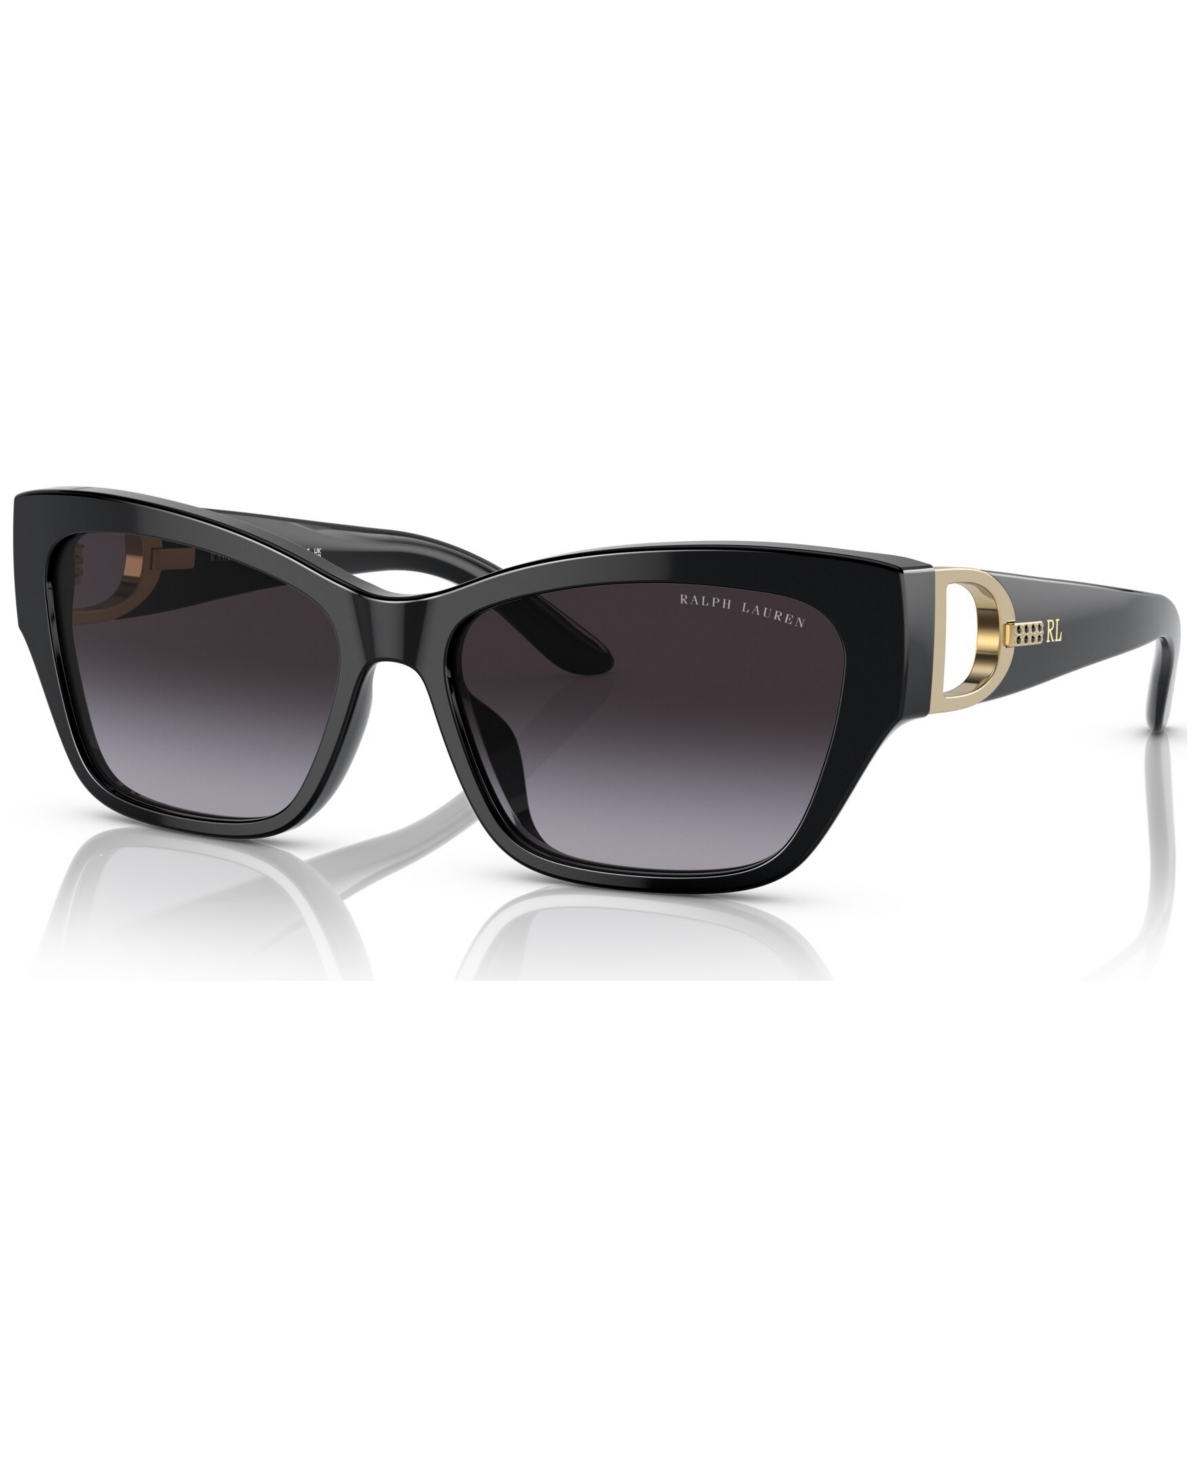 Ralph Lauren Women's Sunglasses, The Audrey In Shiny Black